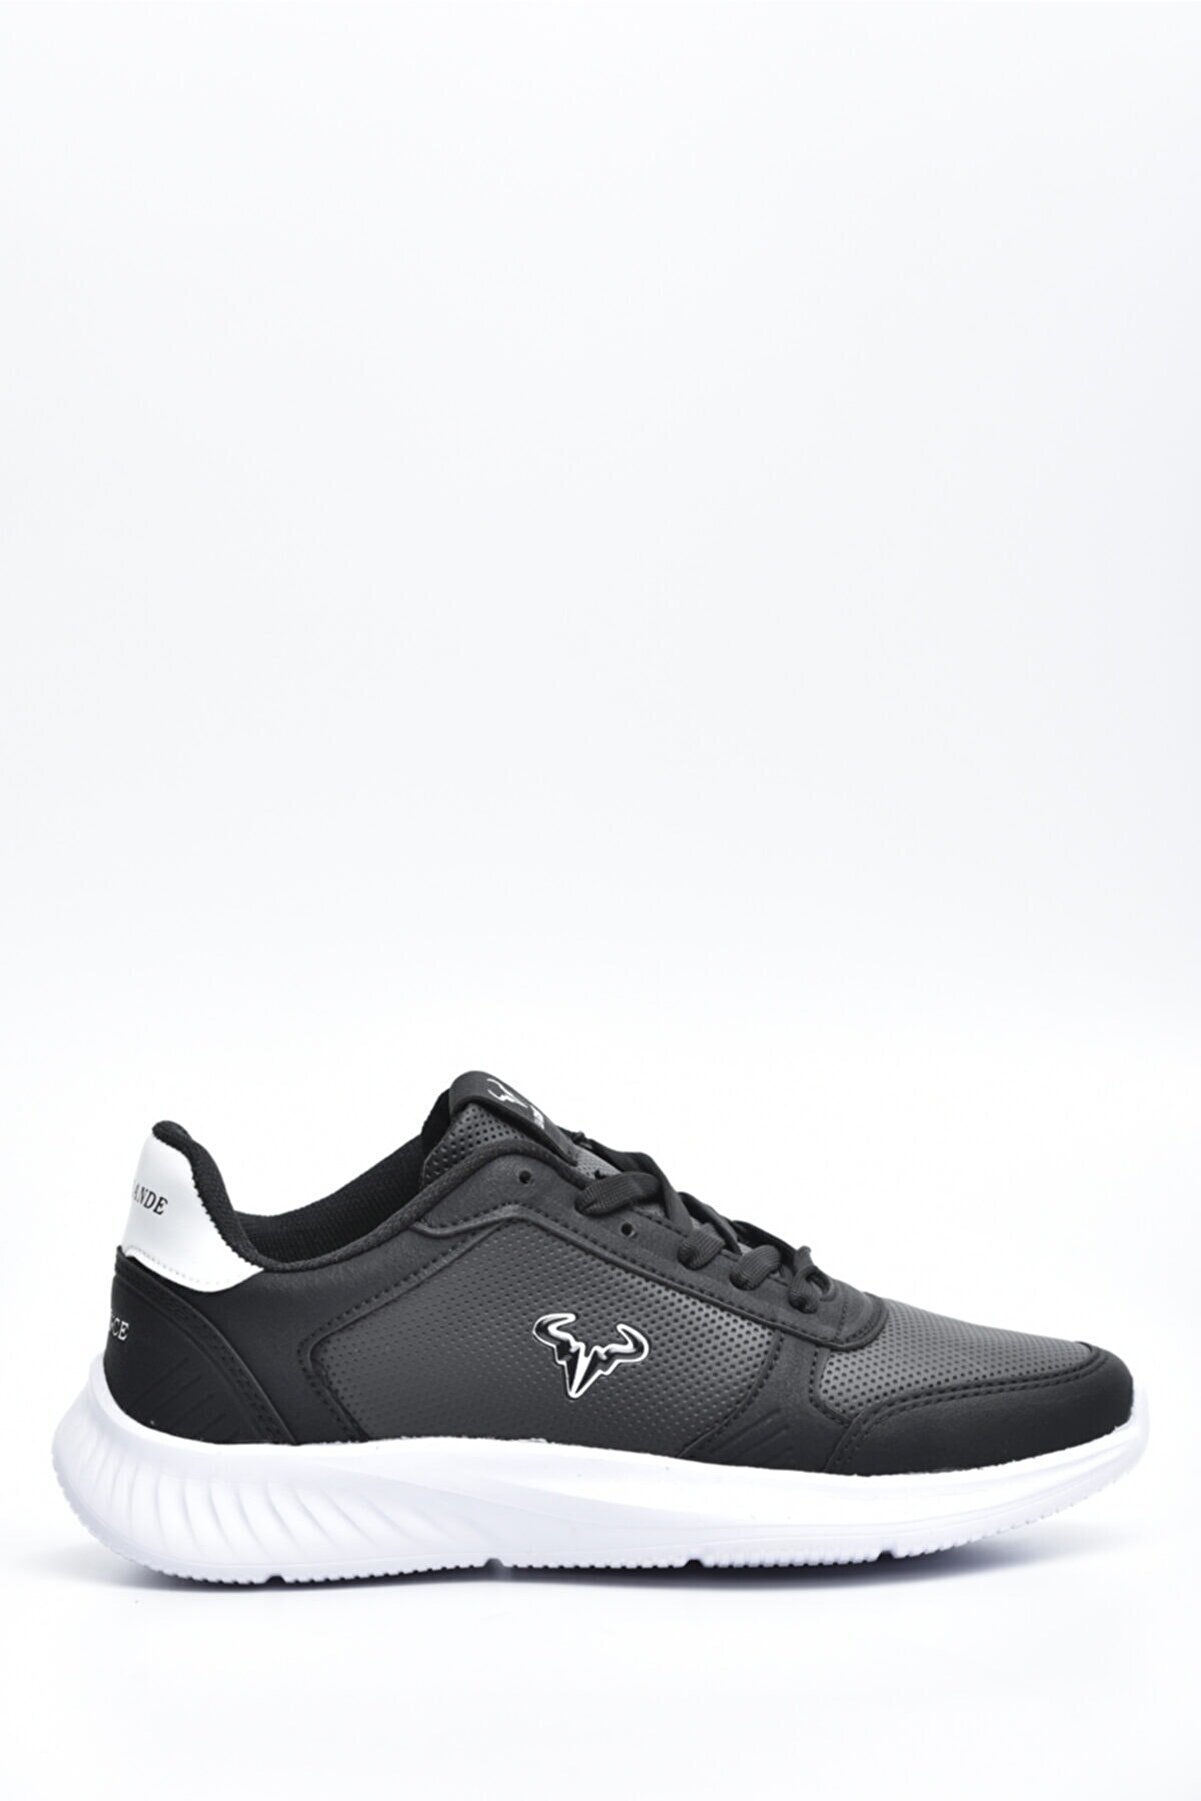 Windbeta Siyah Beyaz Sneaker Spor Ayakkabı Wb-021